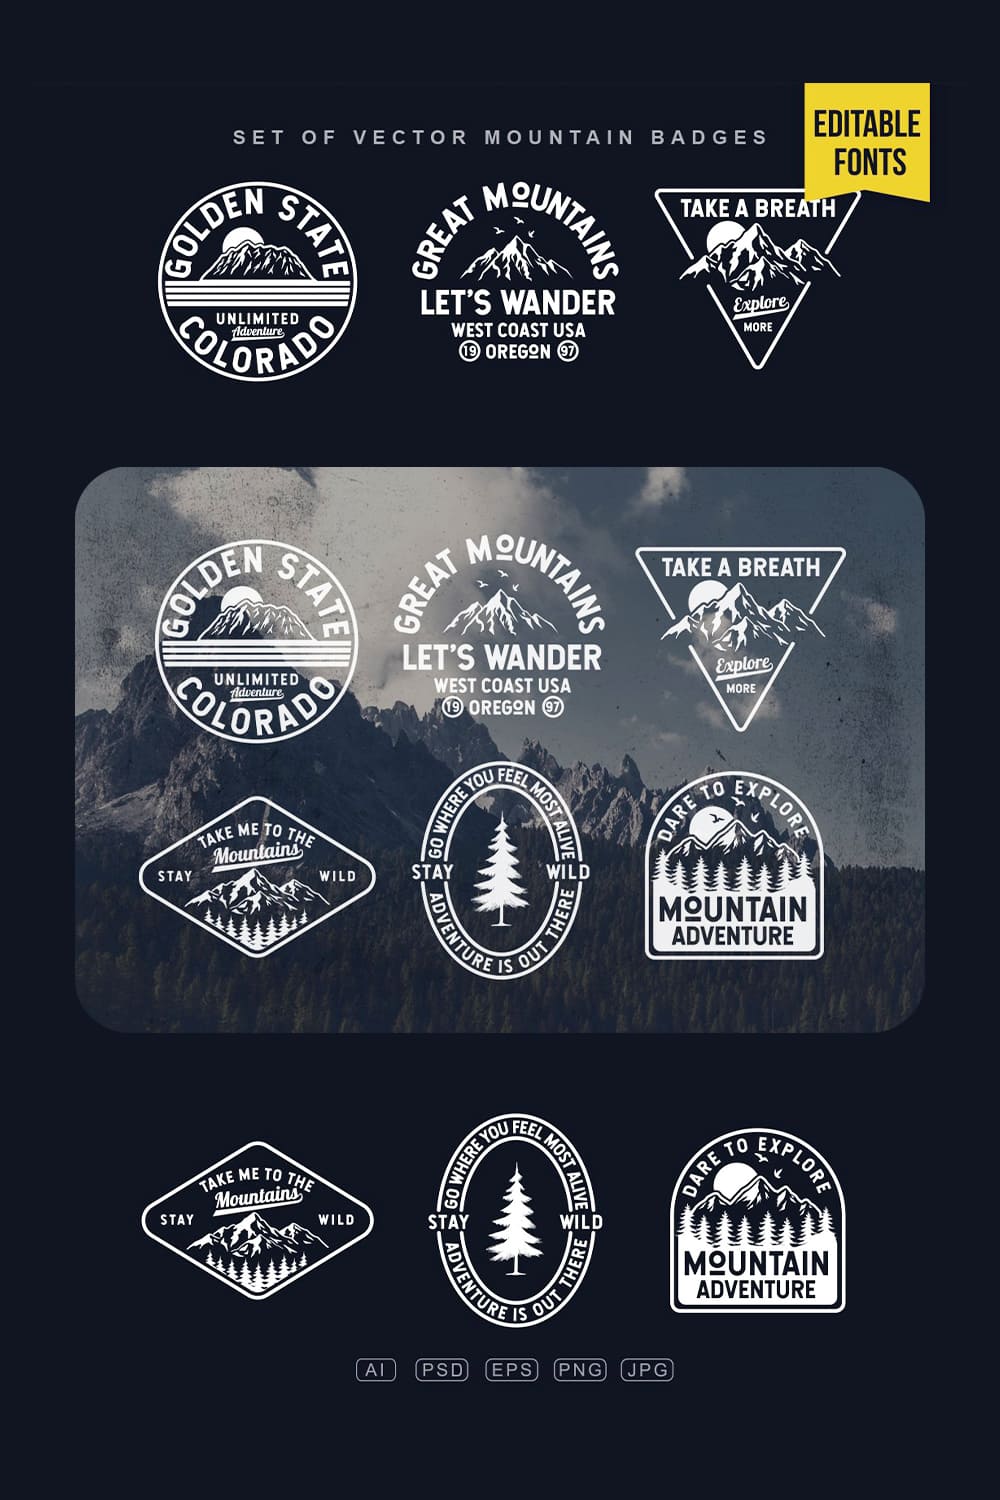 Vector Mountain Badges Pinterest image.